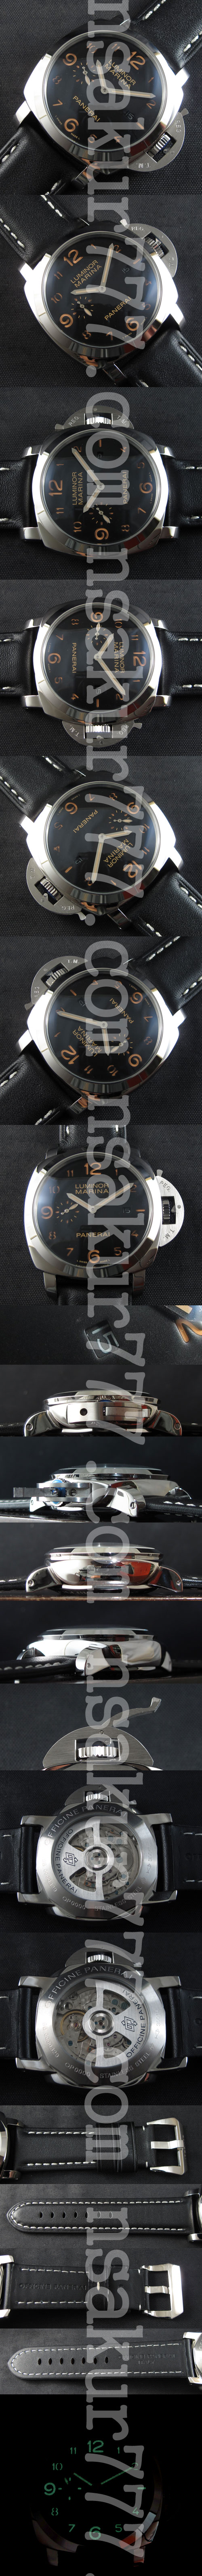 【44MM、138g】パネライ ルミノール マリーナ PAM00359一流レベル偽物時計